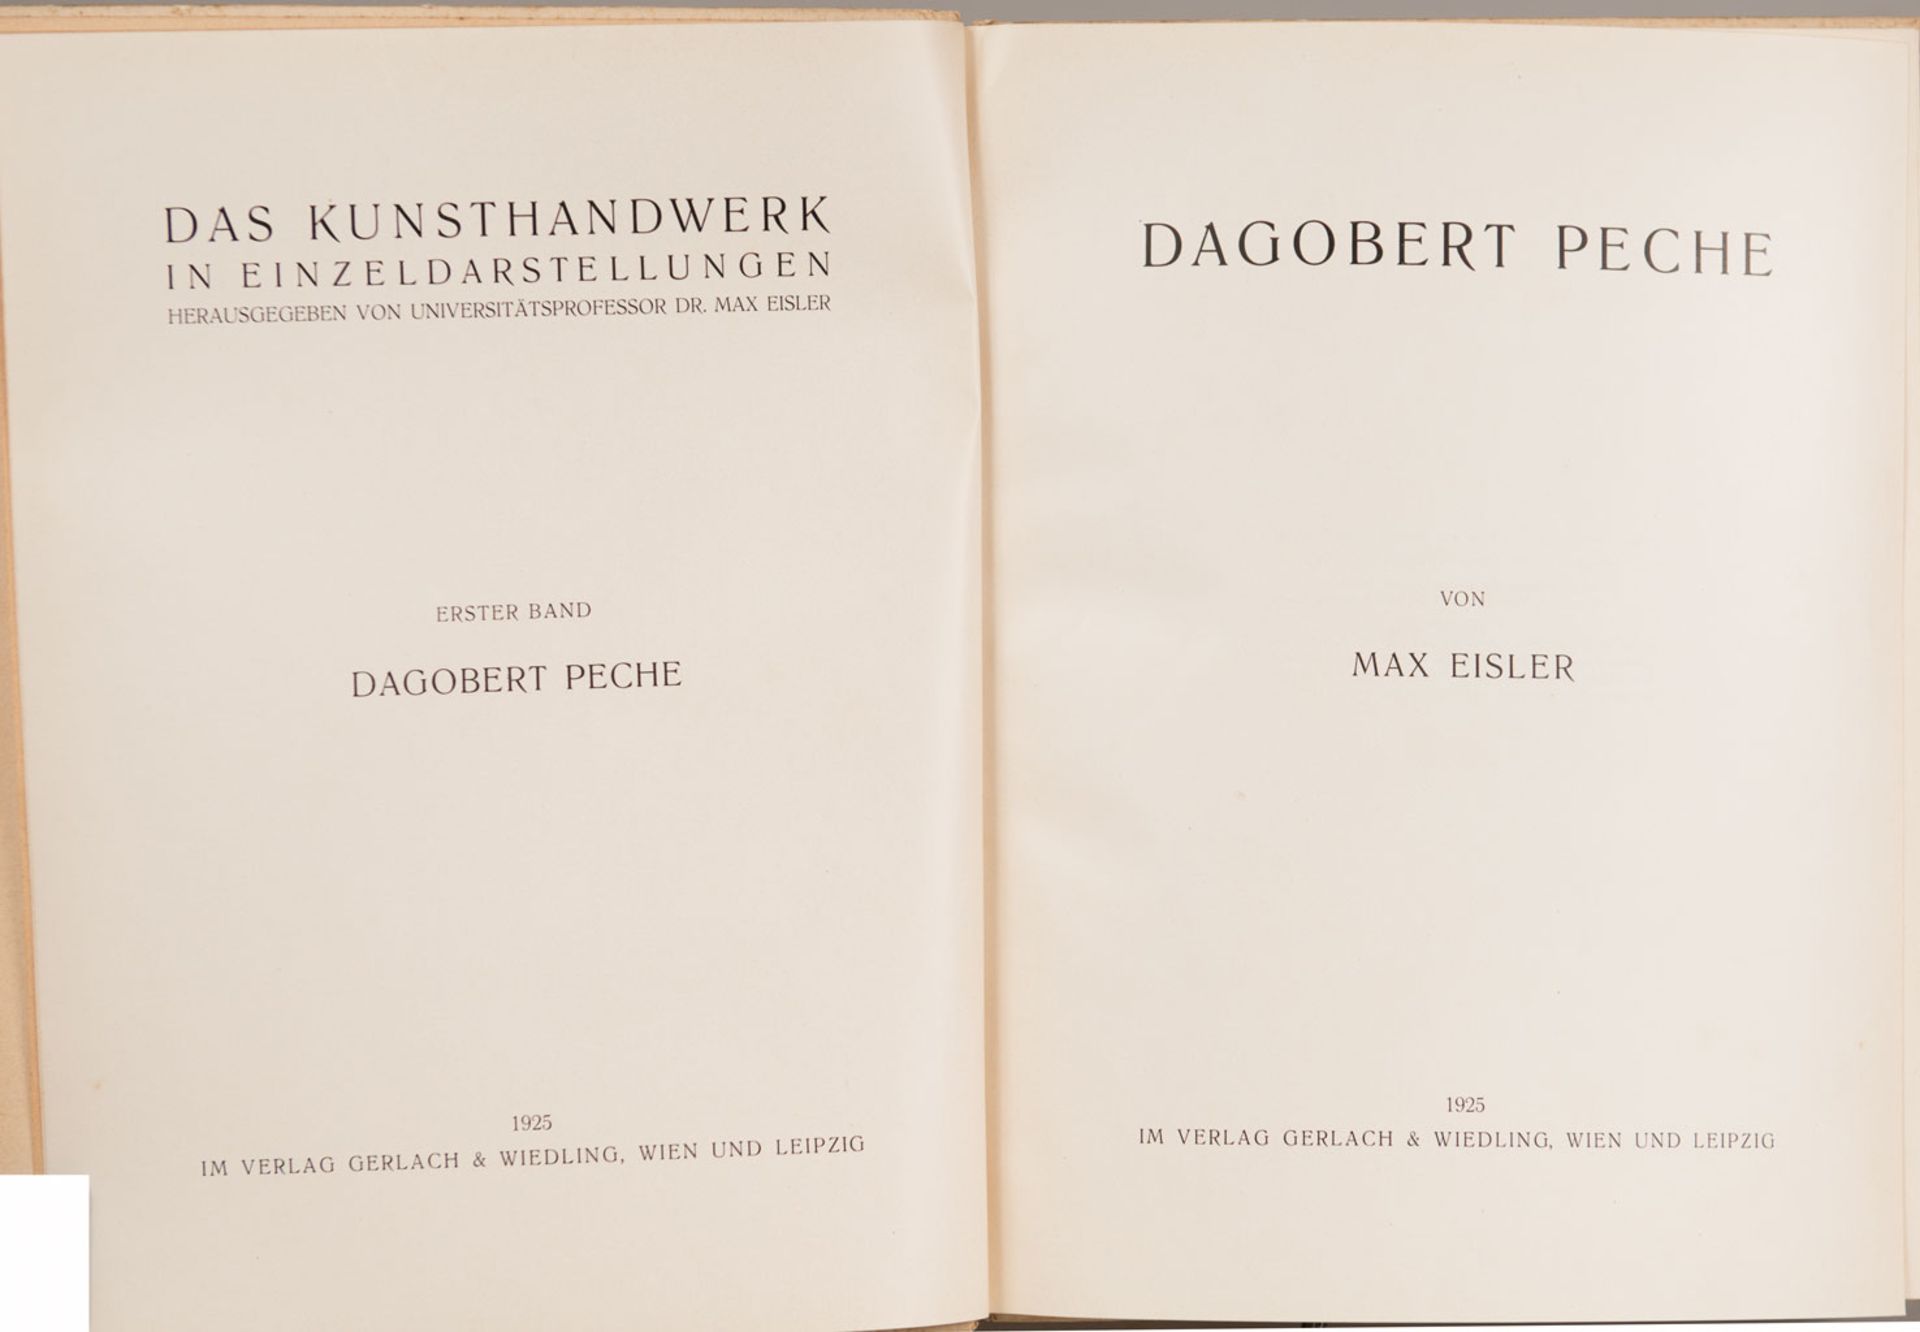 Dagobert Peche by Max Eisler - Image 2 of 3